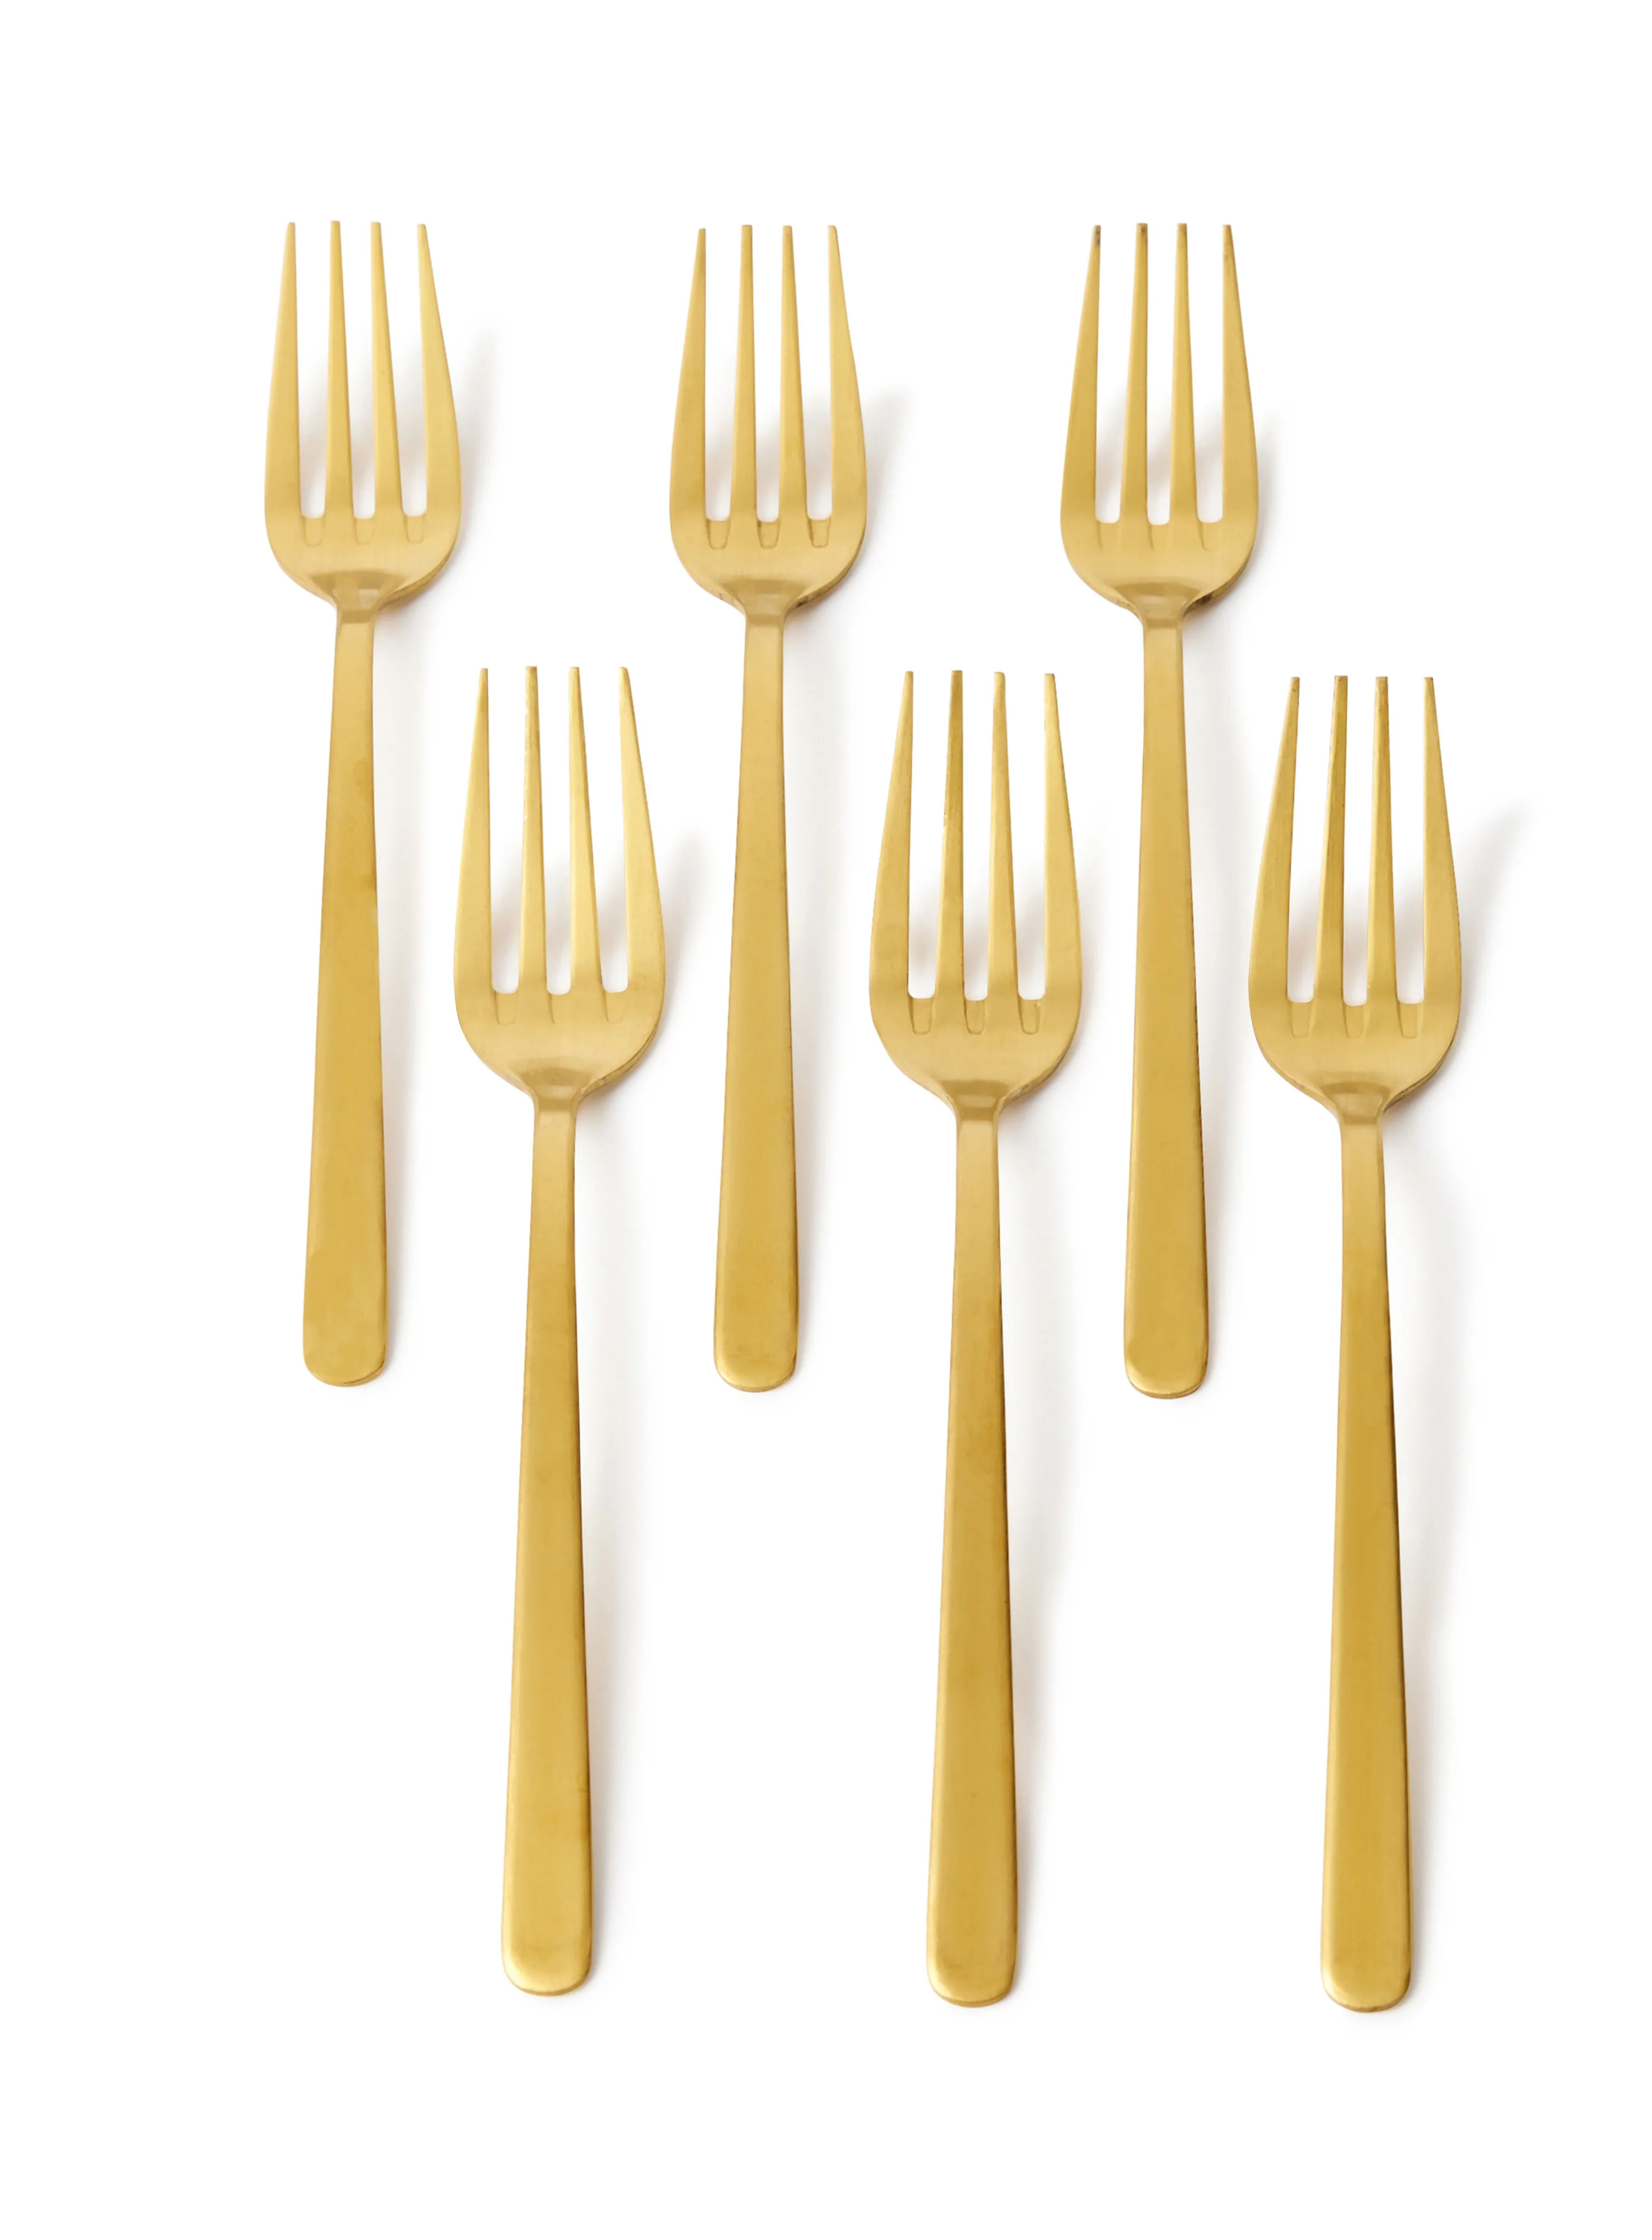 noon east 6 Piece Forks Set - Made Of Stainless Steel - Silverware Flatware - Fork Set - Serves 6 - Design Gold Sail